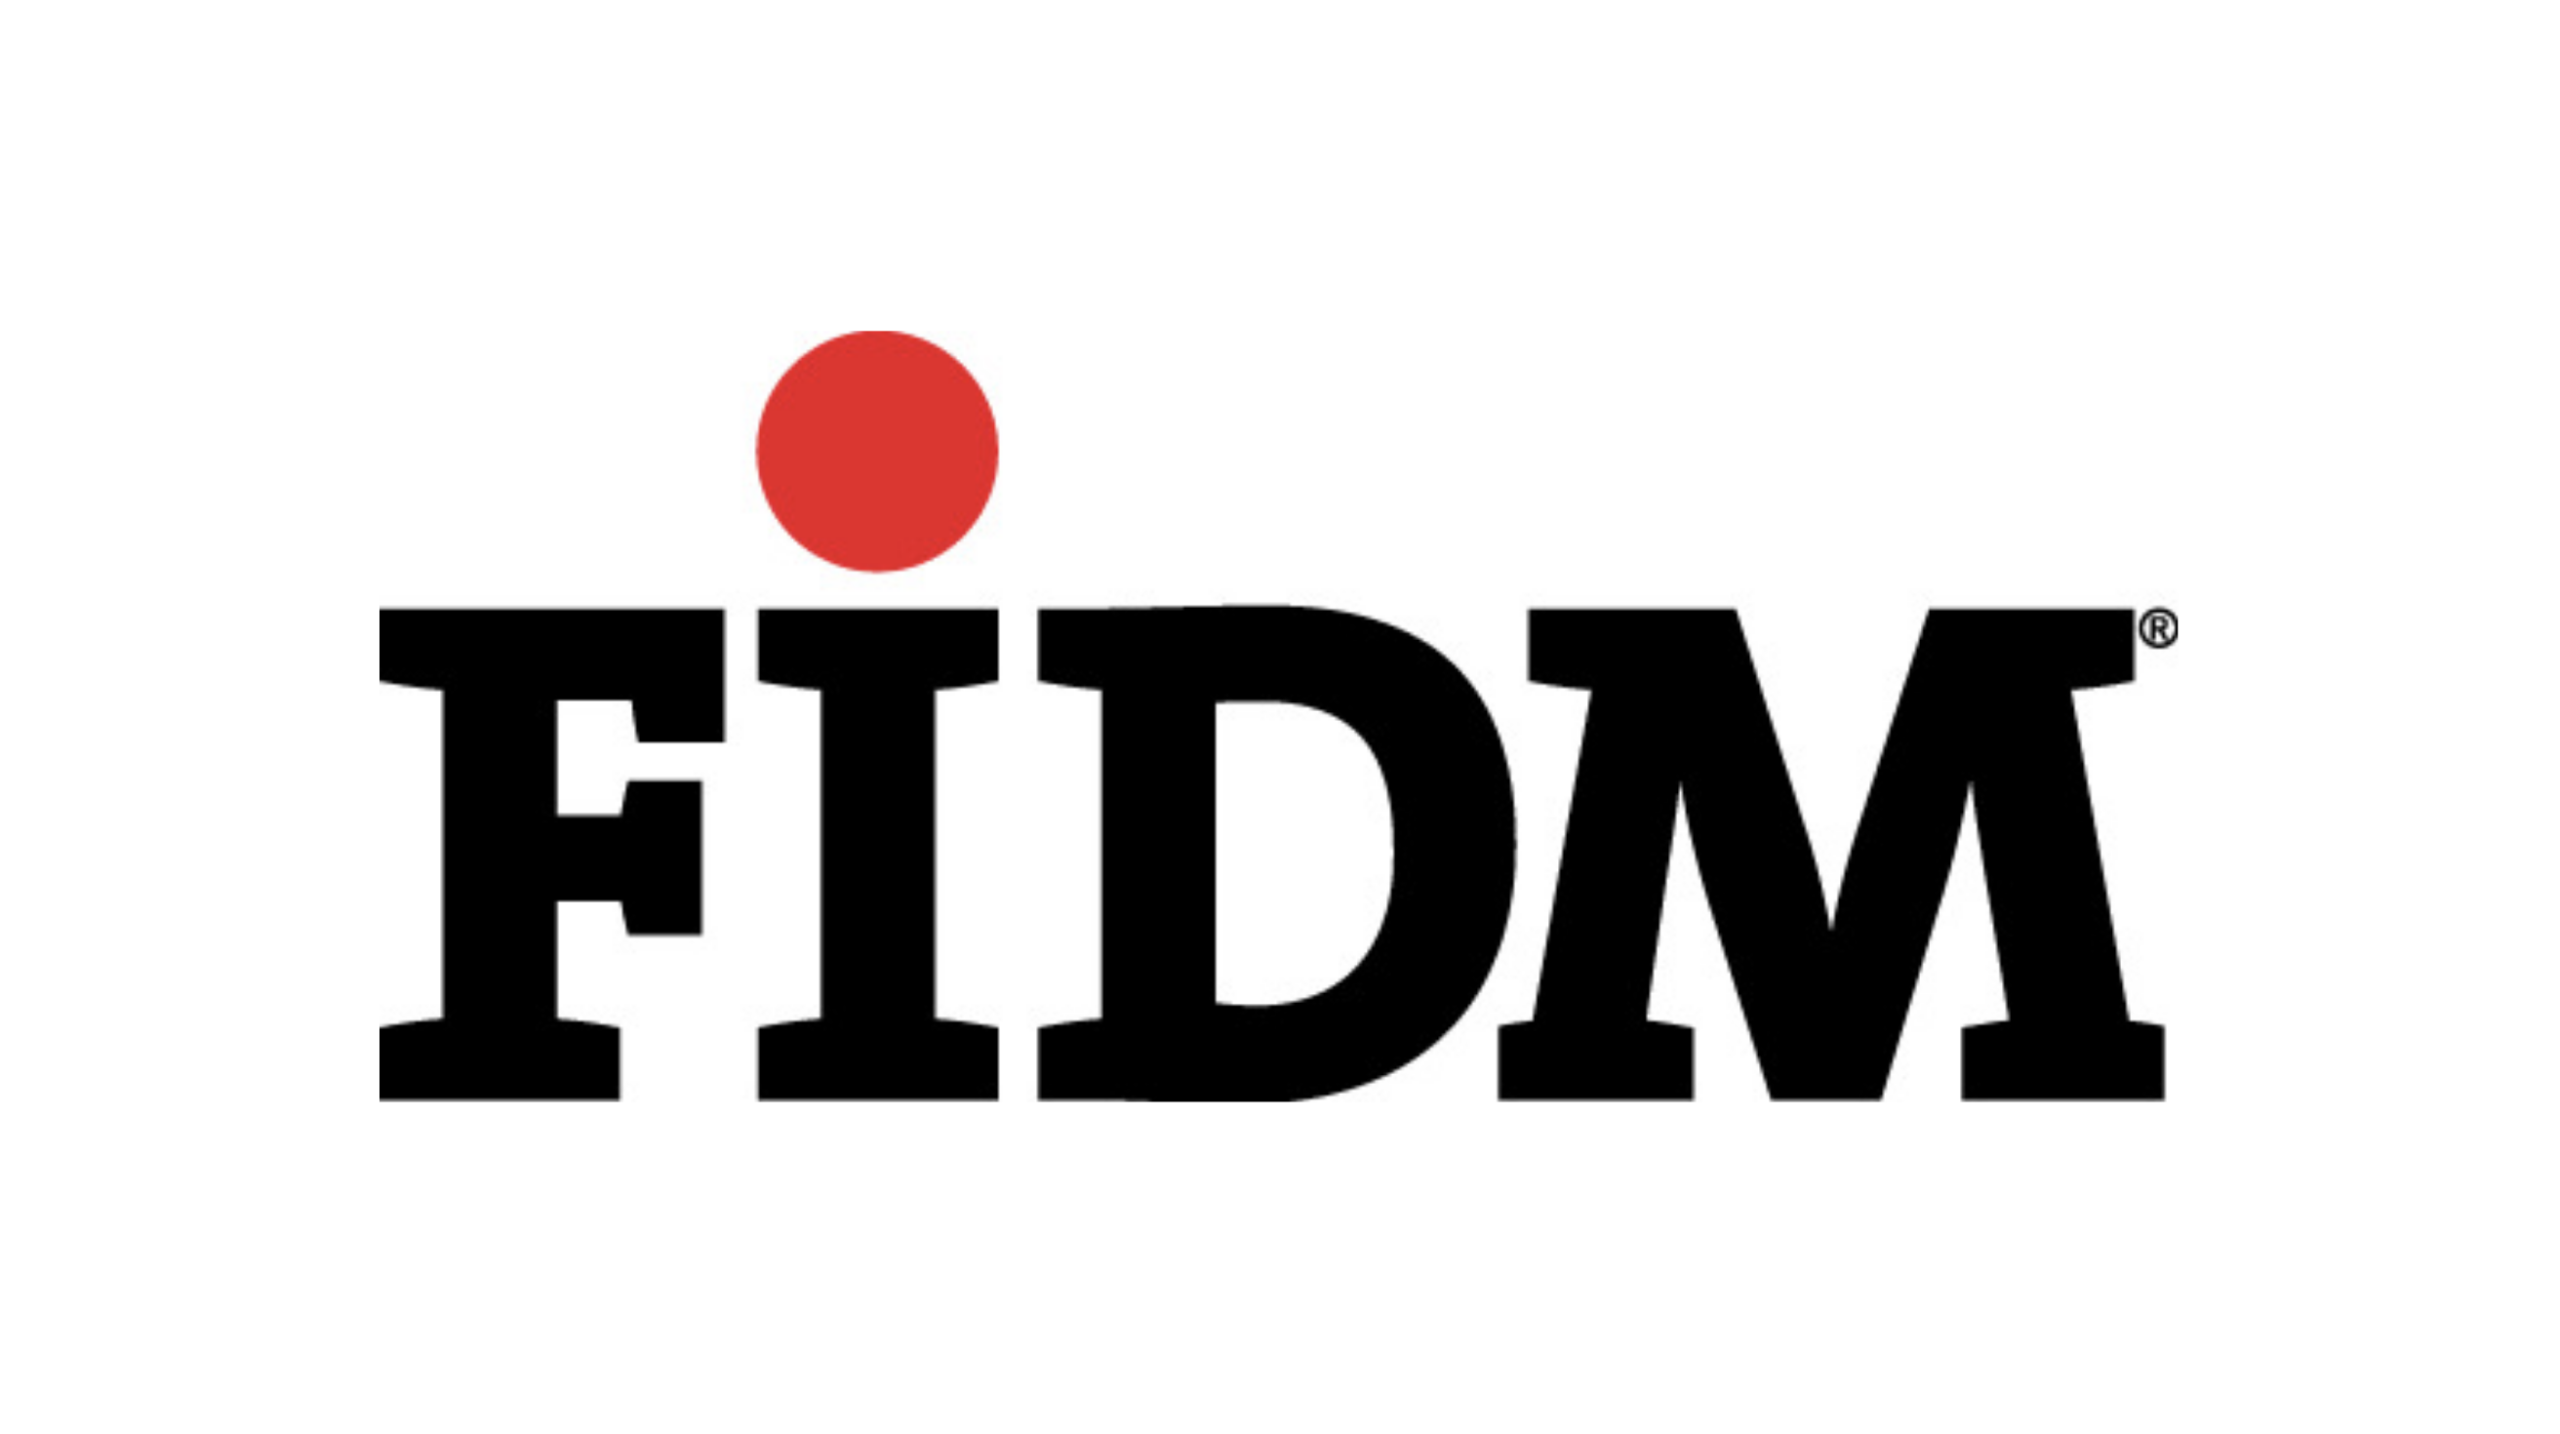 Fashion Institute of Design and Merchandising (FIDM)